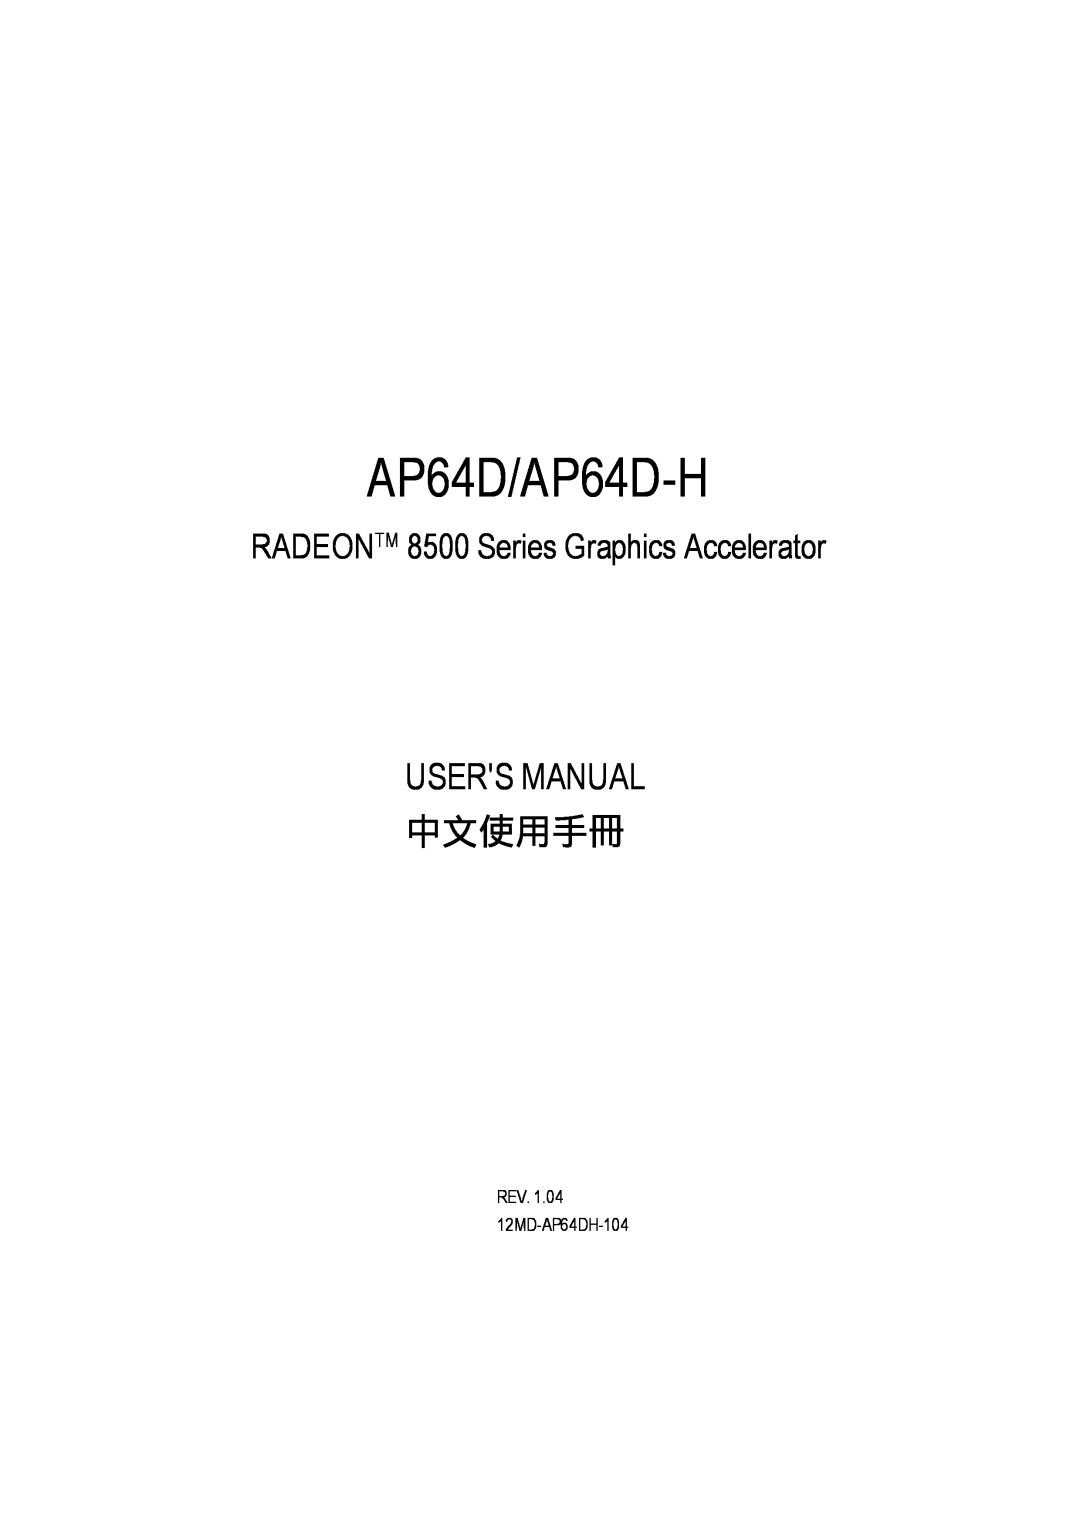 Gigabyte user manual AP64D/AP64D-H, Upgrade your Life, Users Manual, RADEONTM 8500 Series Graphics Accelerator 